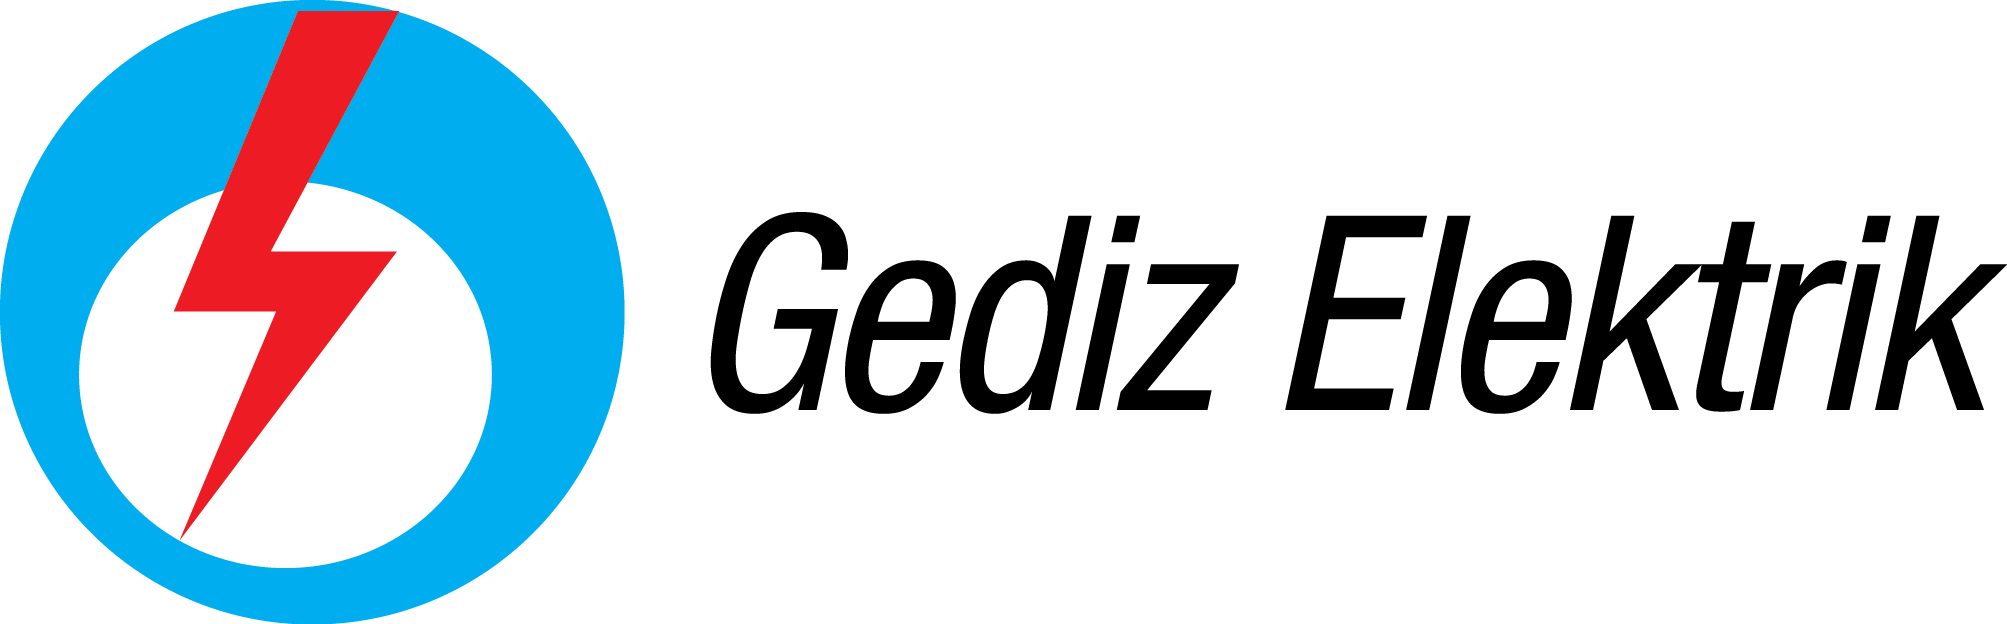 Gediz Elektrik Logo 2.png